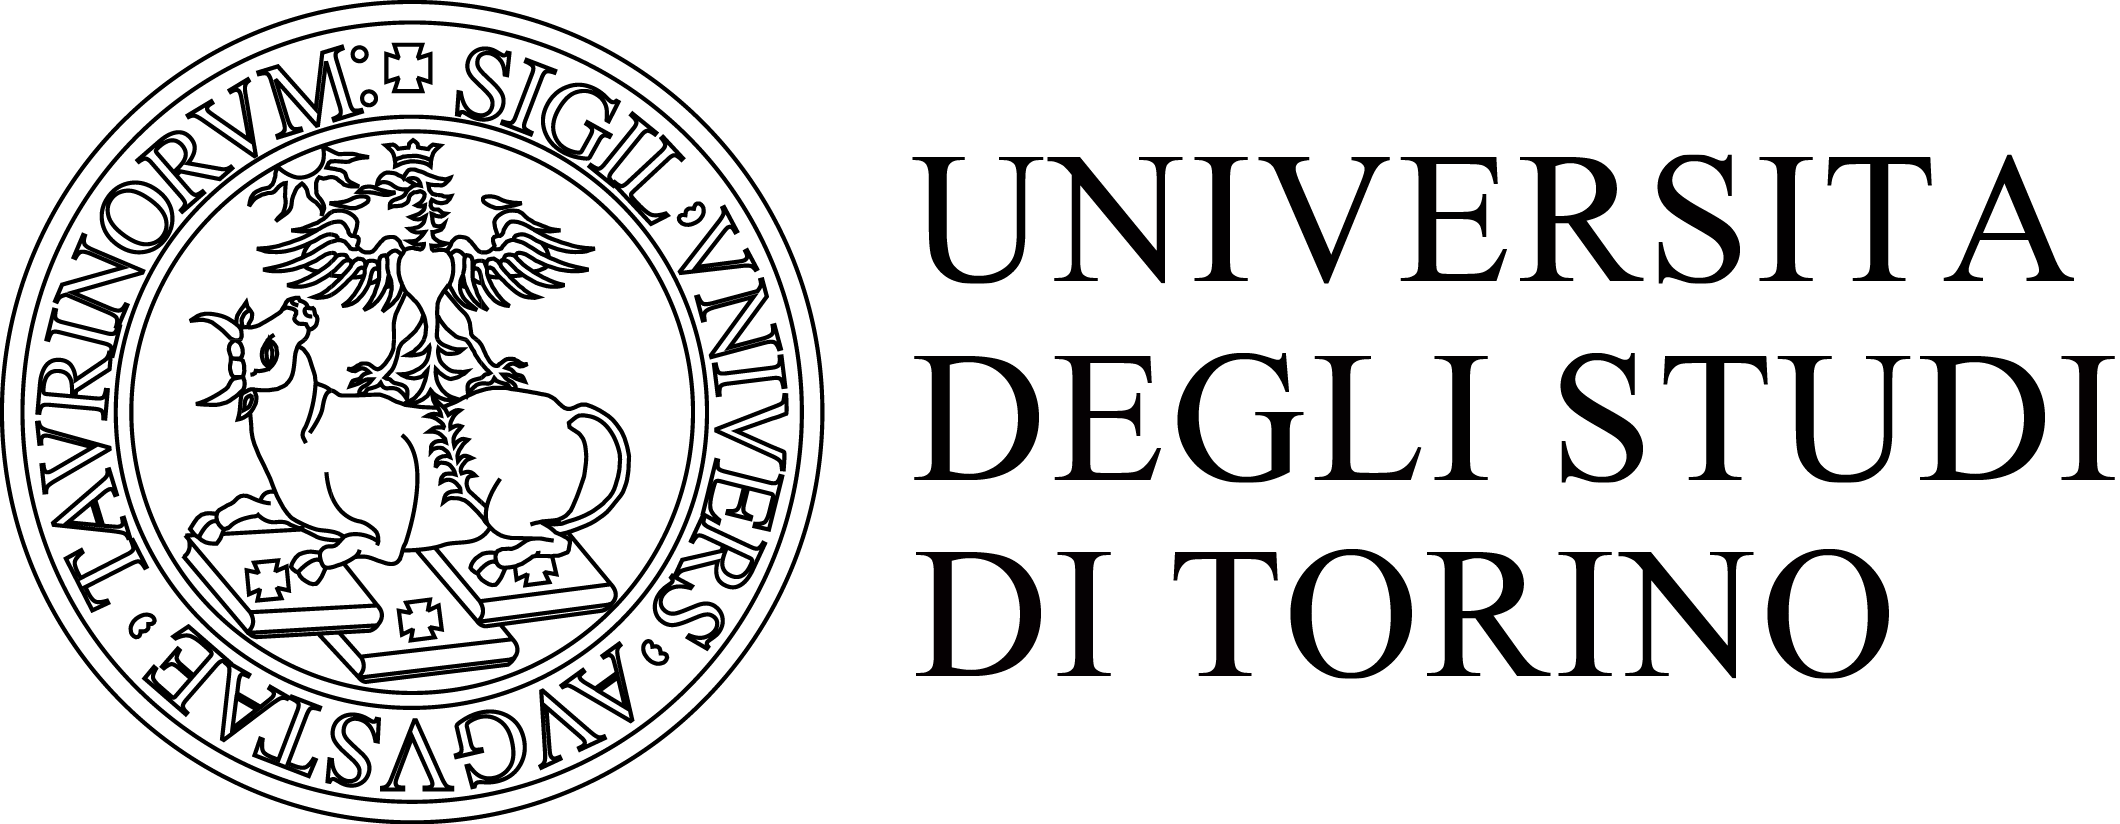 Universita-degli-studi-di-torino-logo.png